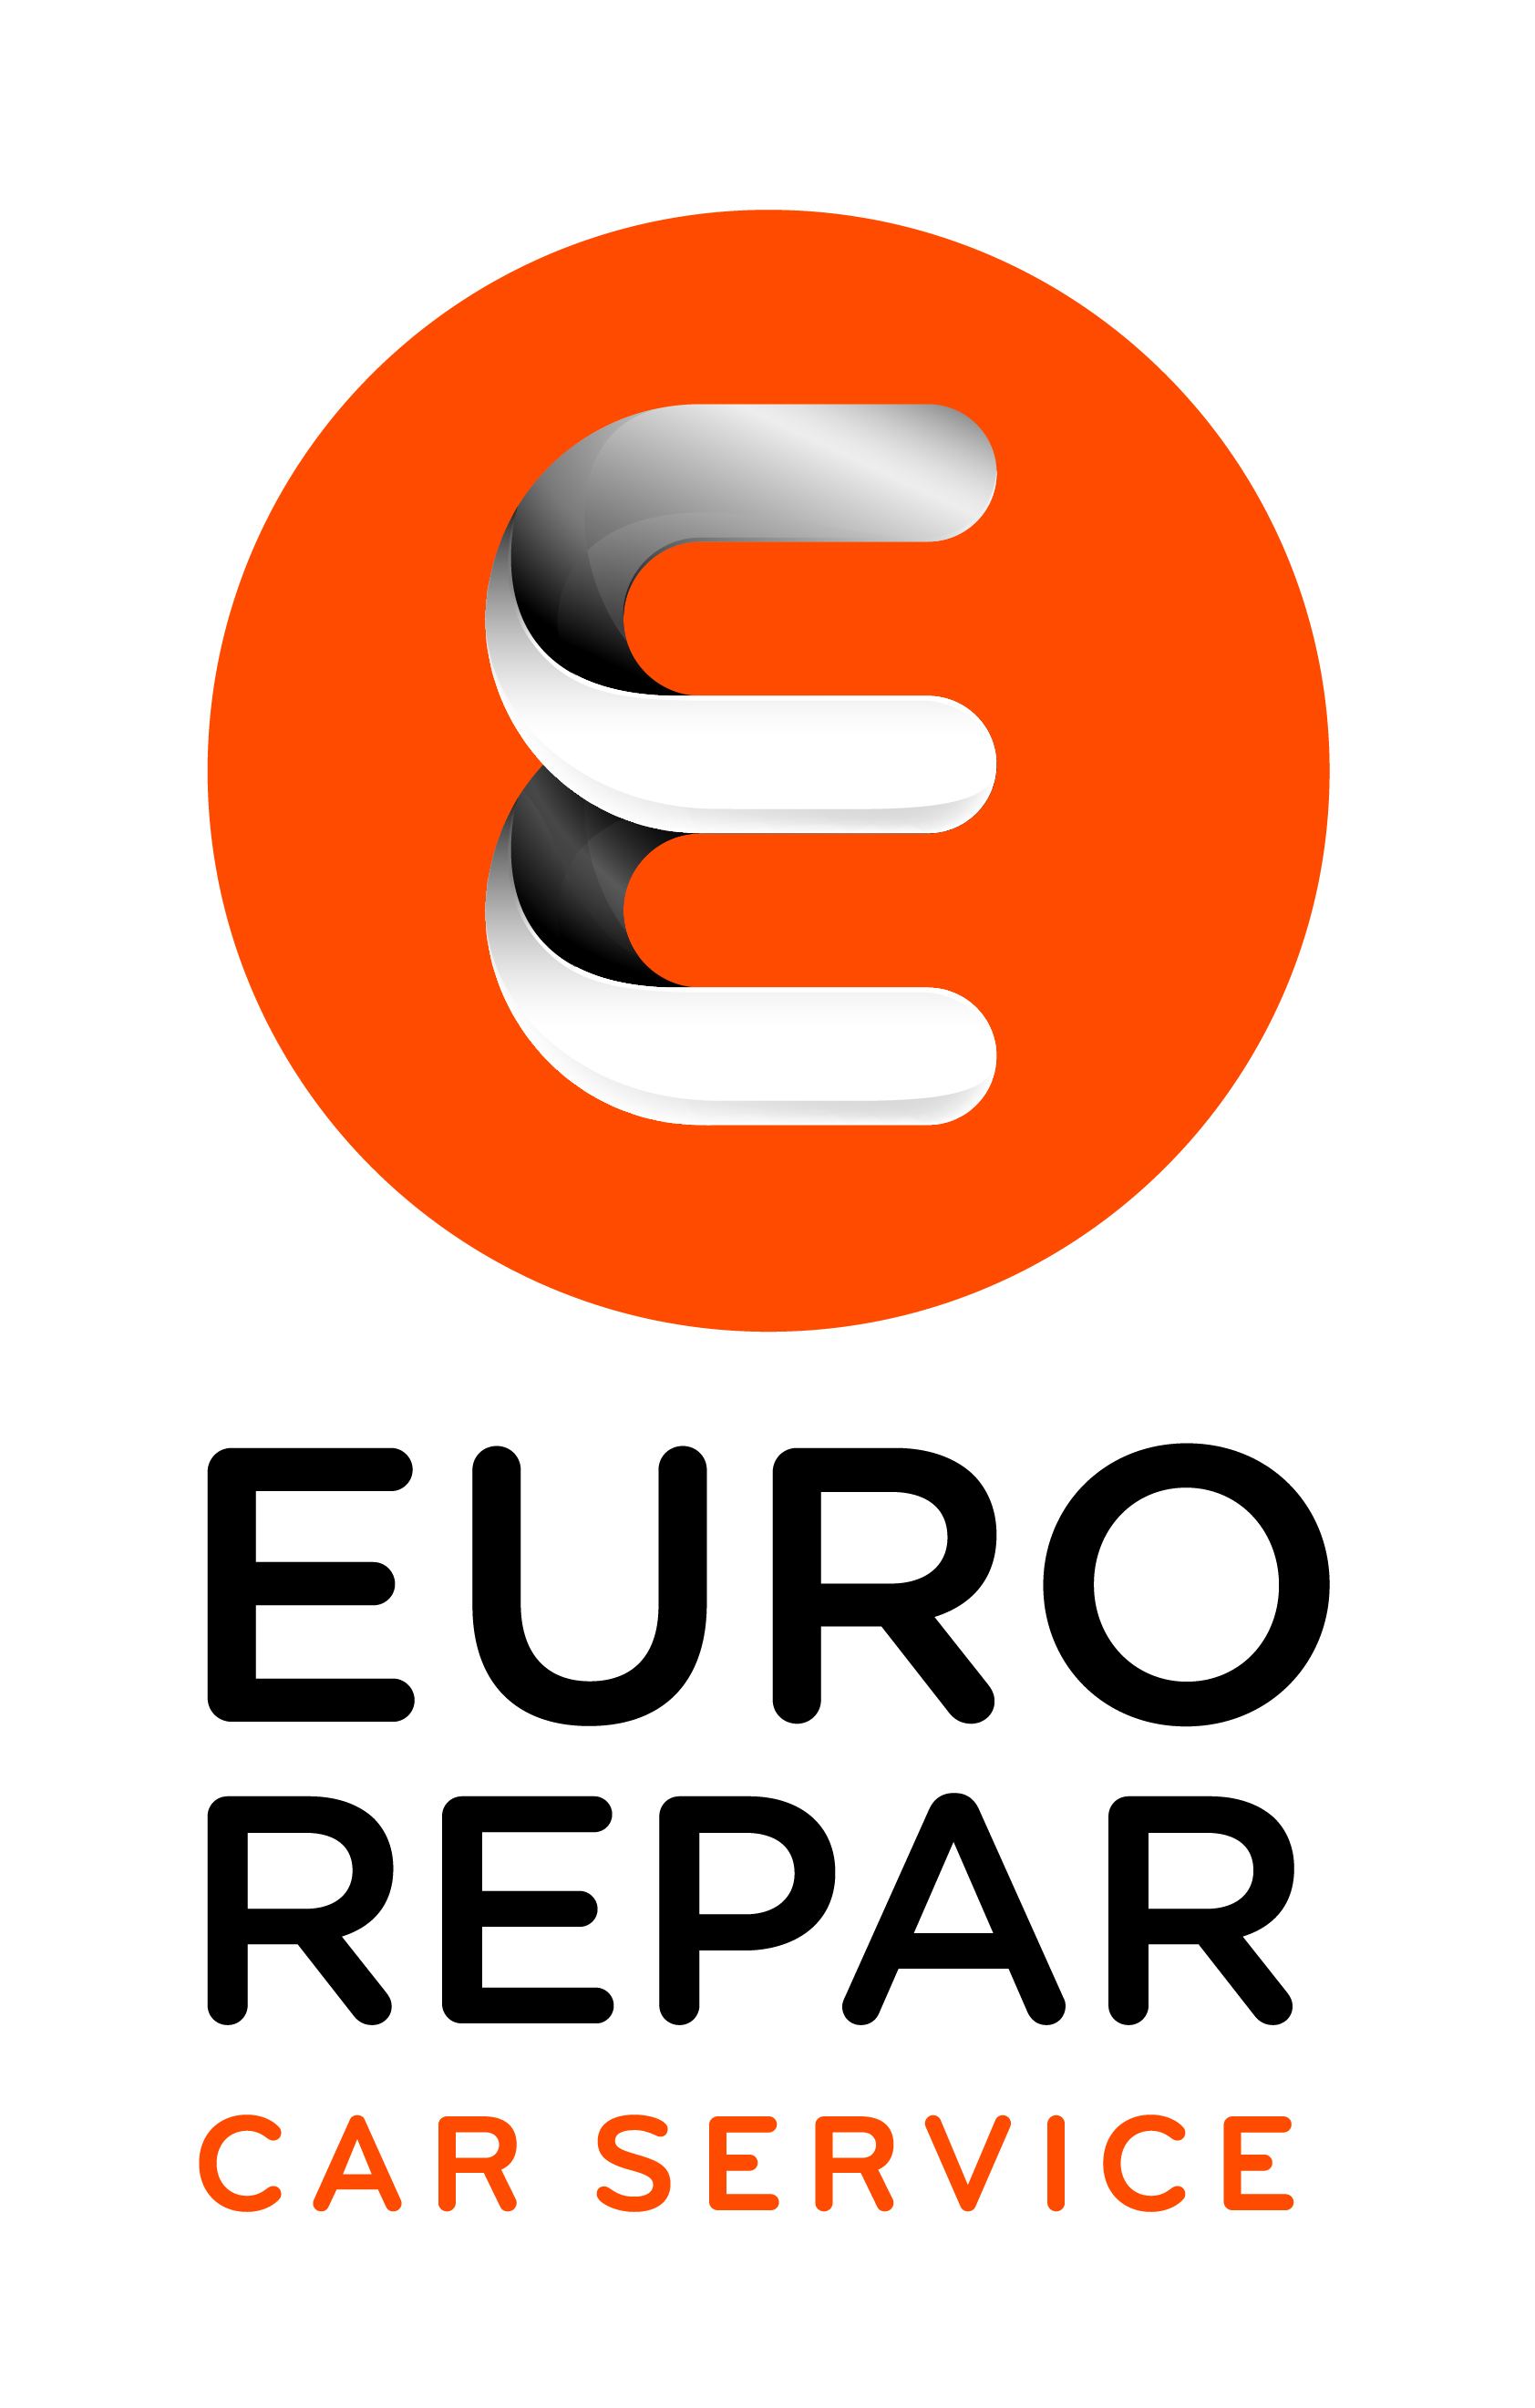 Euro Repar - Eurl Tuduri logo